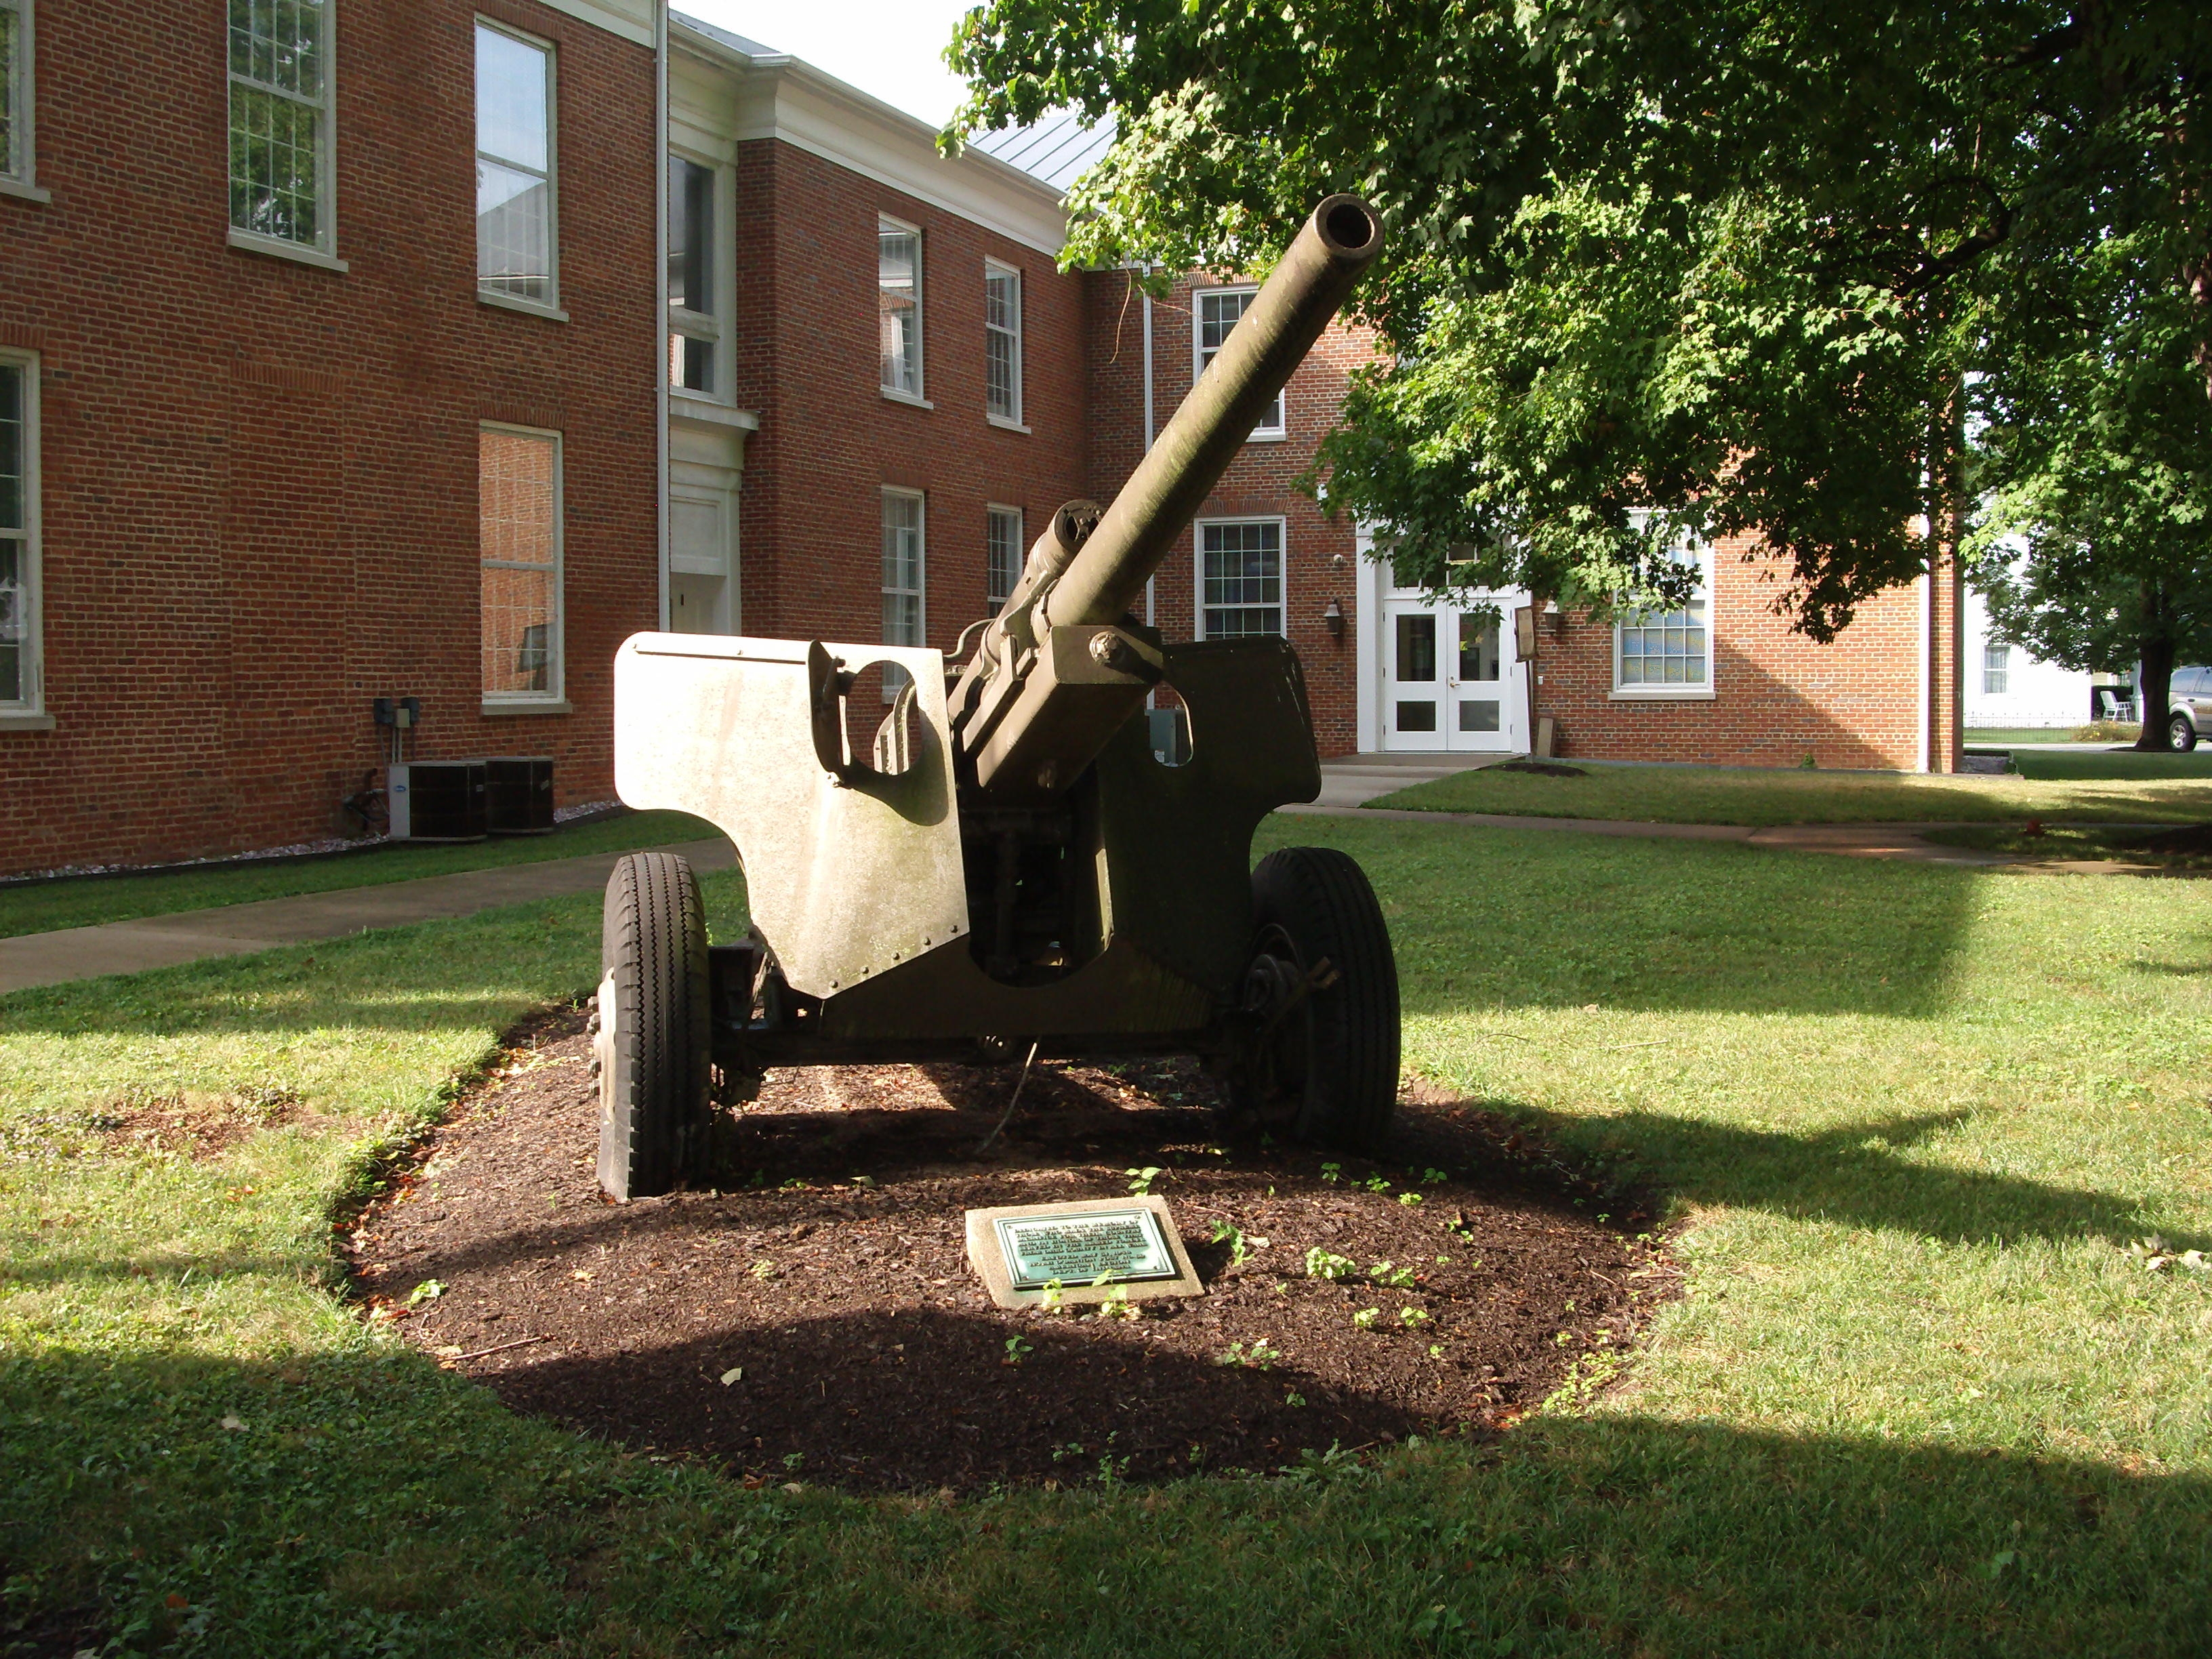 Full View - - Ohio County Veterans Memorial Marker